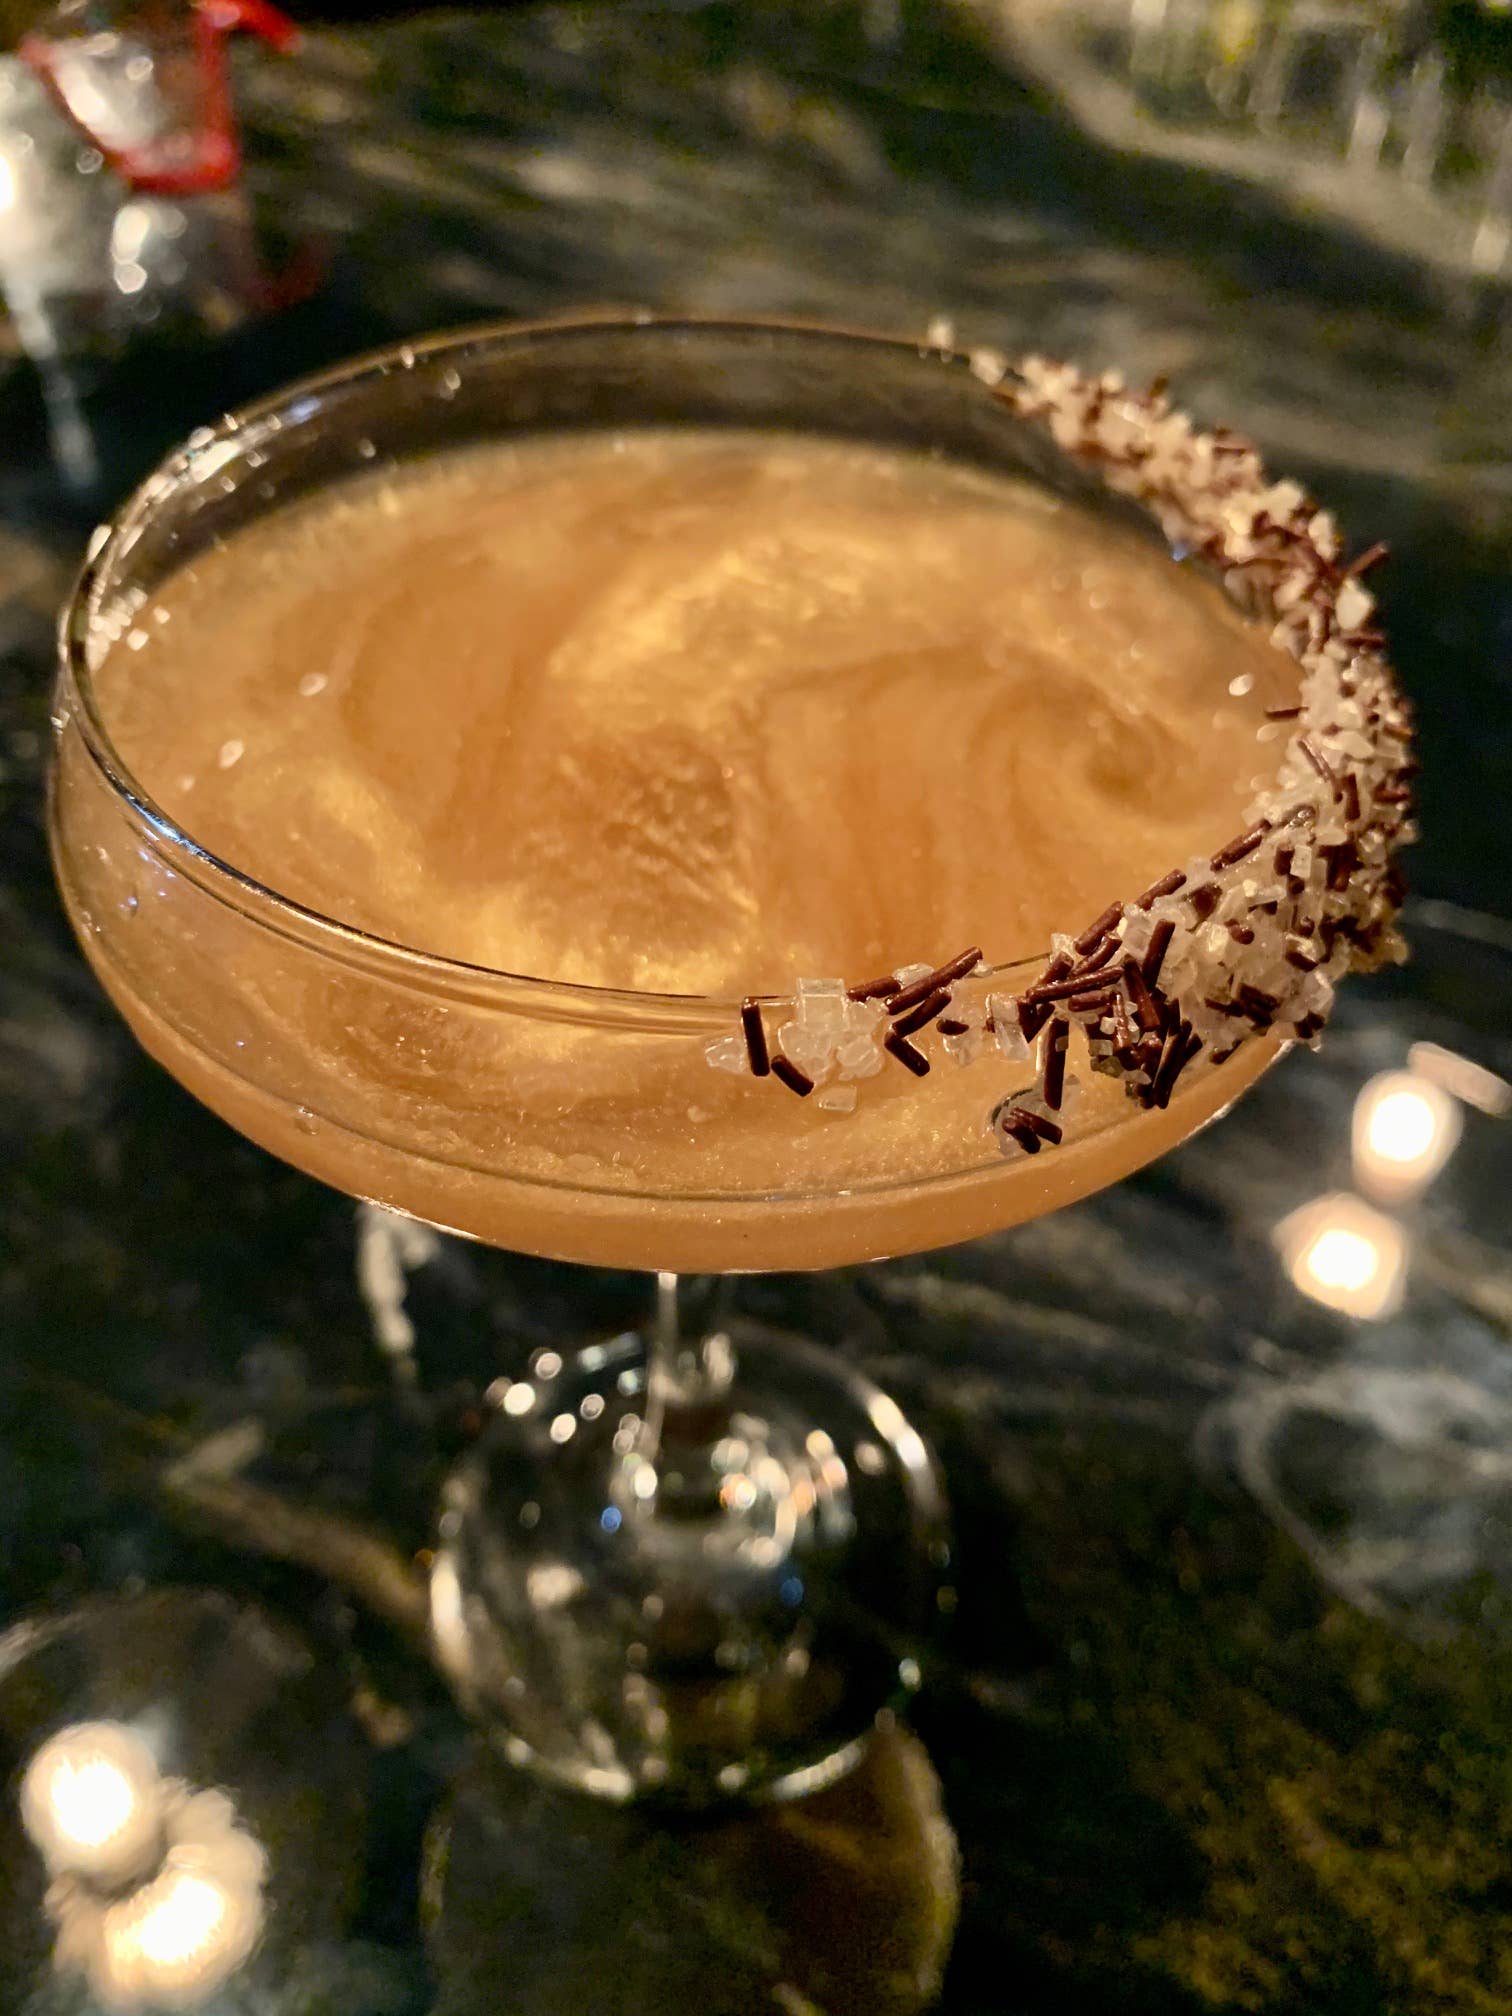 White Coat Cocktails™ Gold Cocktail Glitter